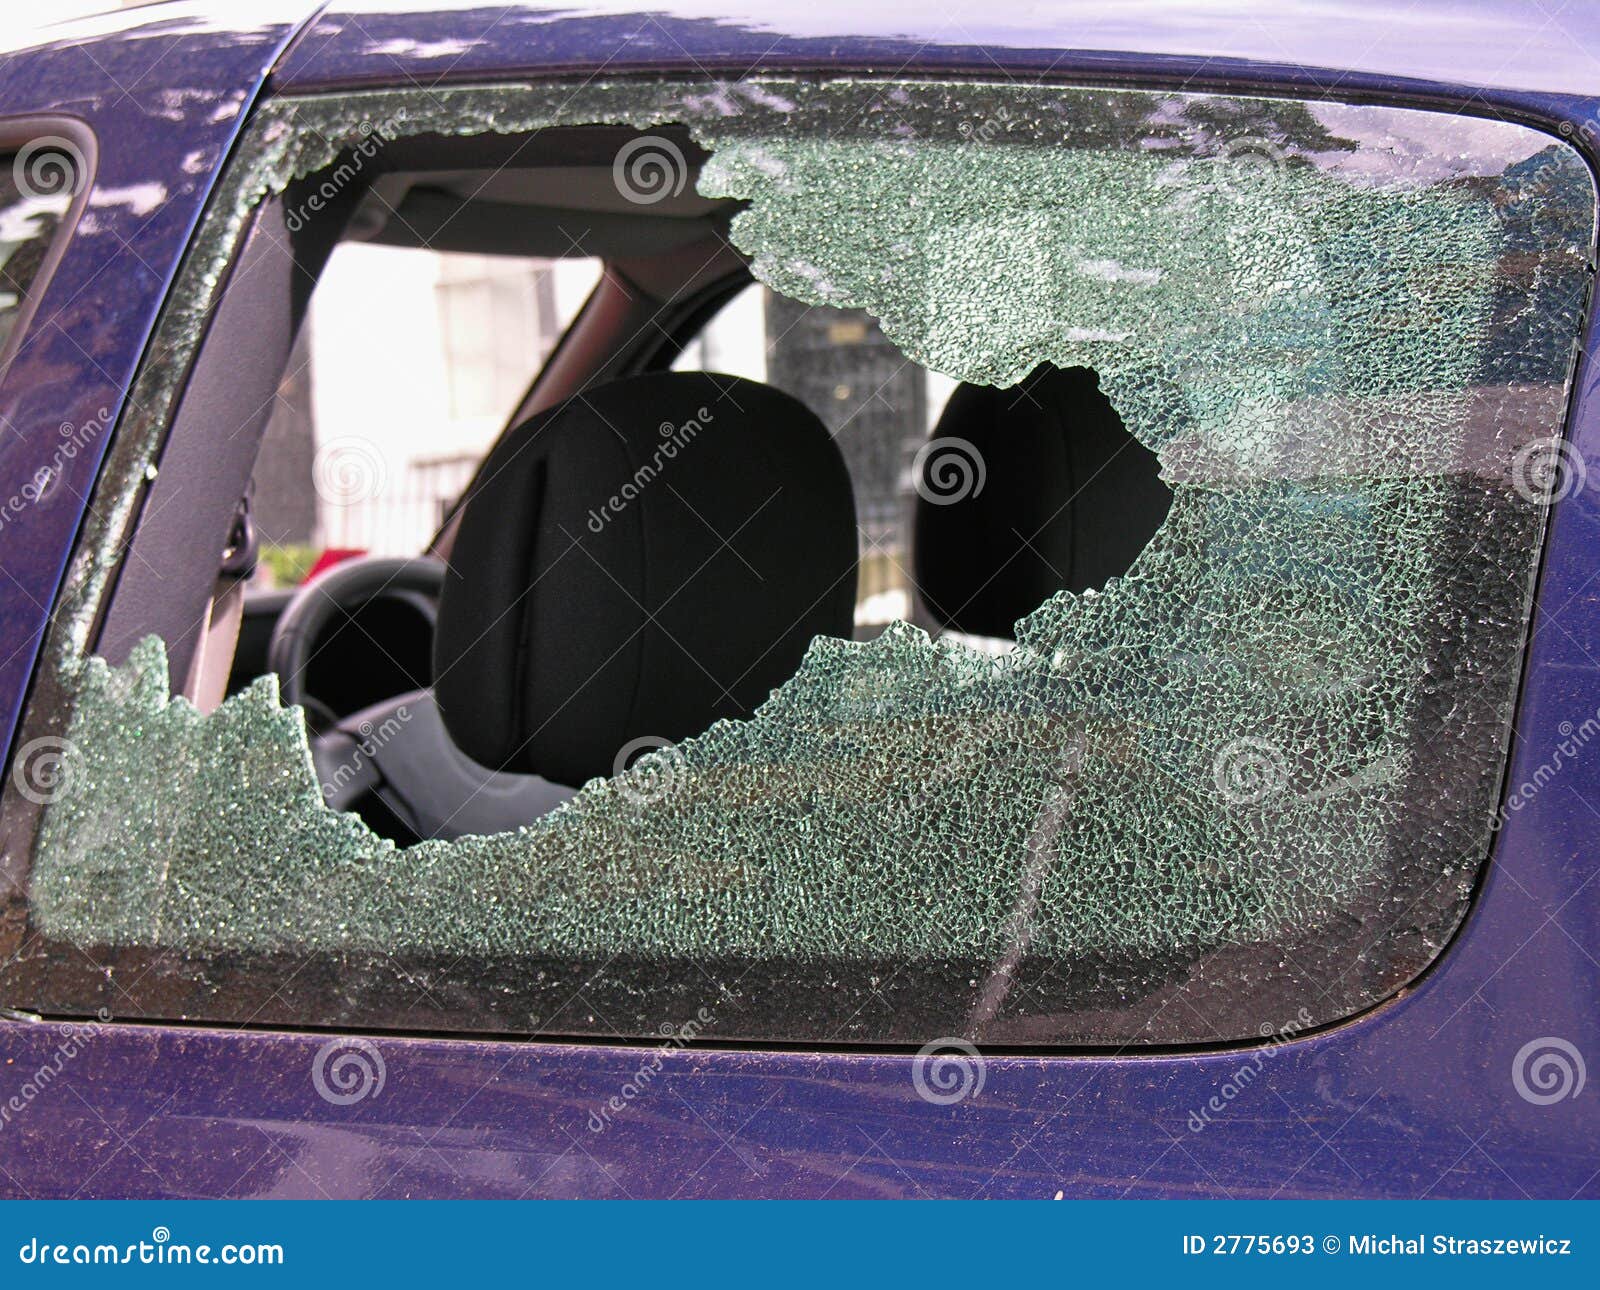 6,947 Broken Car Window Stock Photos - & Royalty-Free Stock Photos from Dreamstime